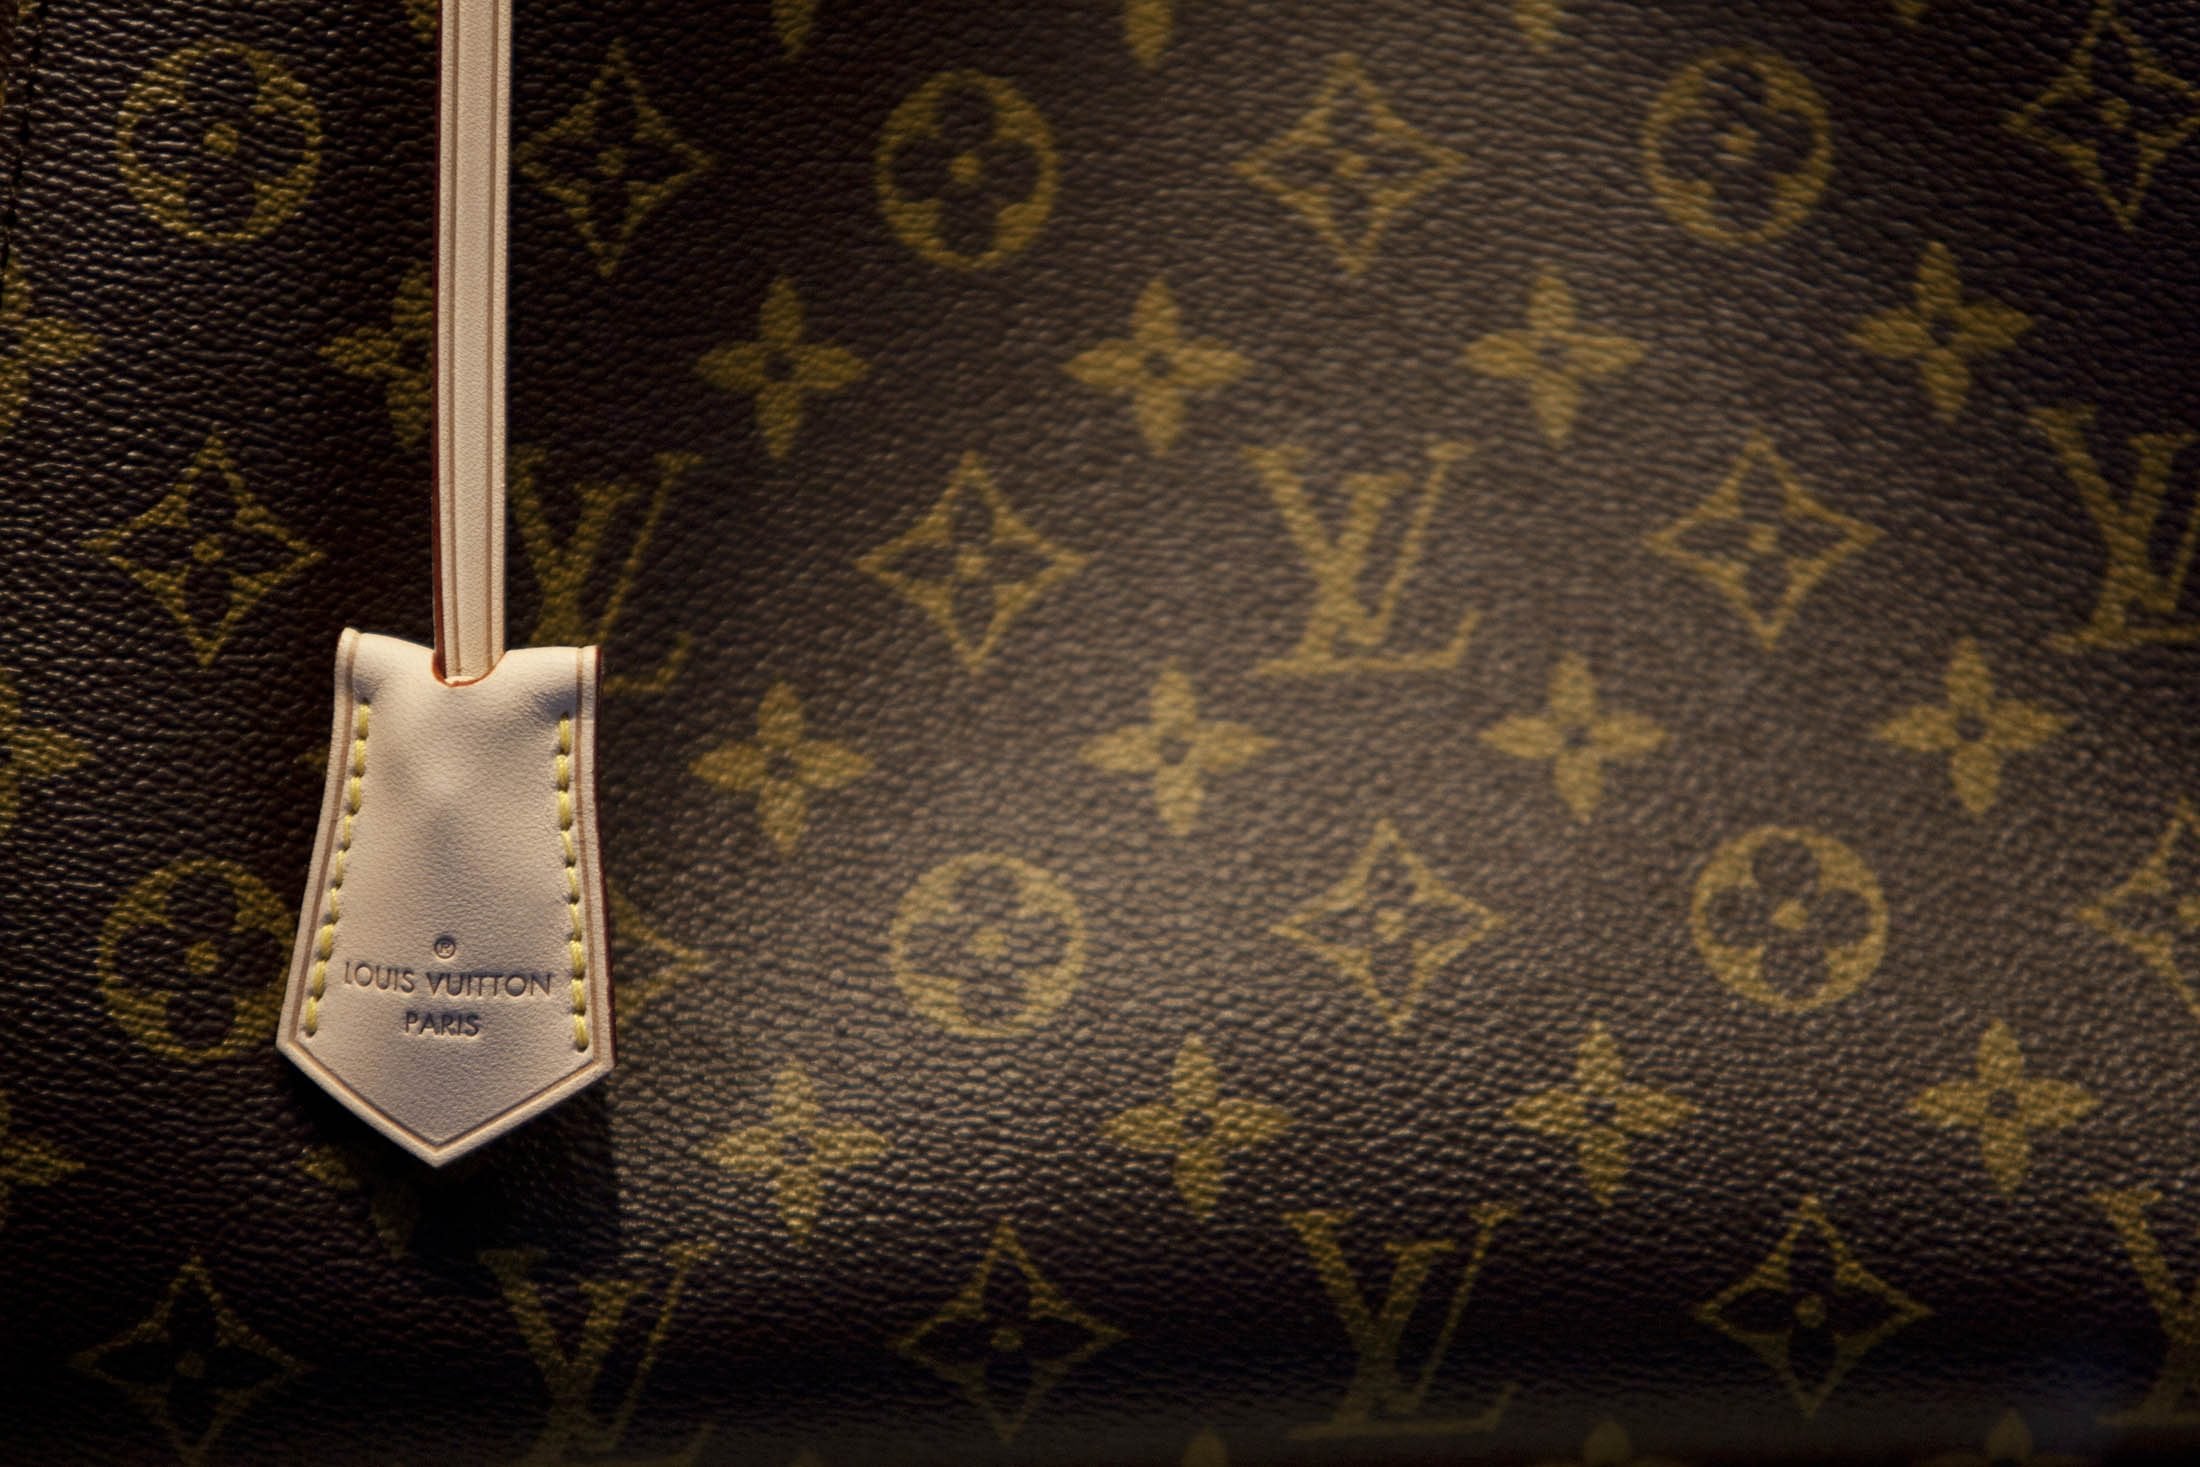 Louis Vuitton’s parent company tops Deloitte’s luxury brand rankings. 